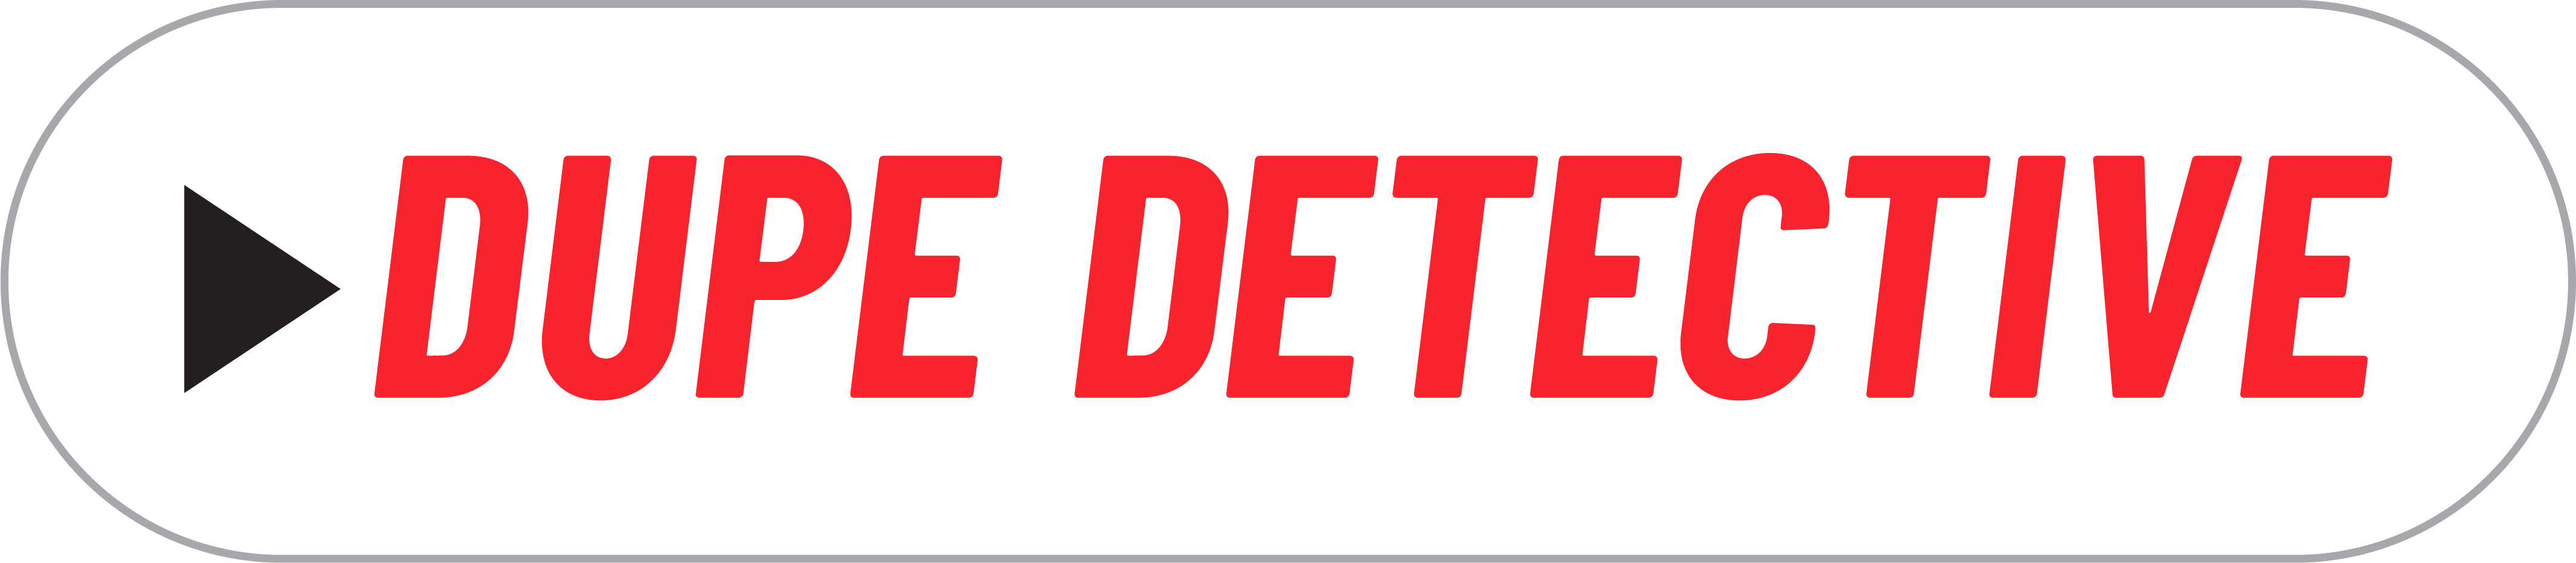 dupe-detective-logo